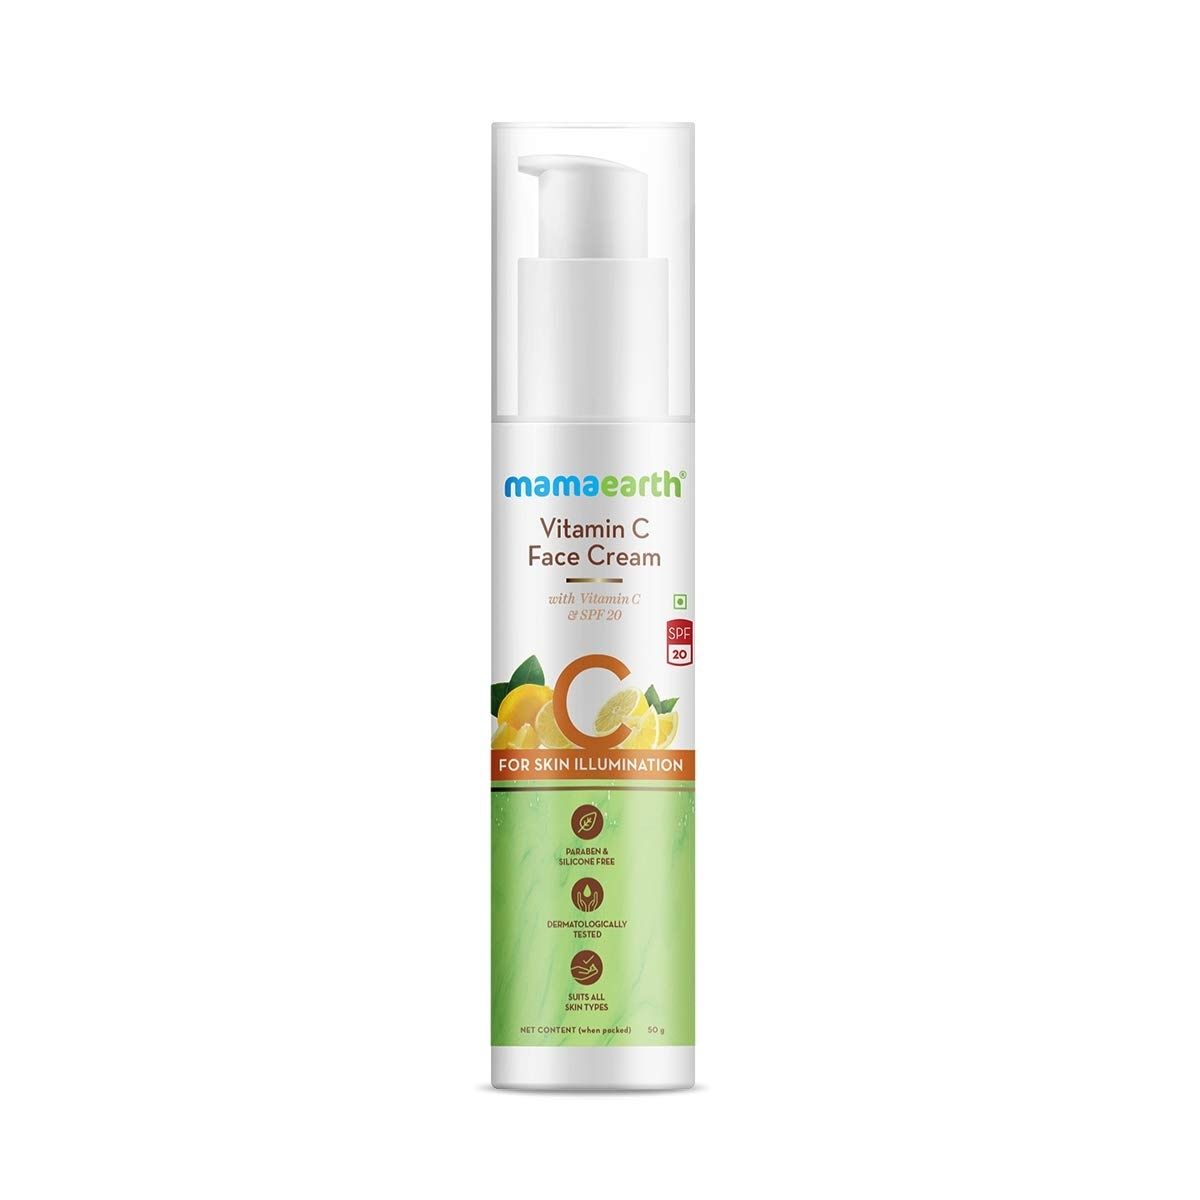 Mamaearth Vitamin C Face Cream With Vitamin C And SPF 20 For Skin Illumination, 50g